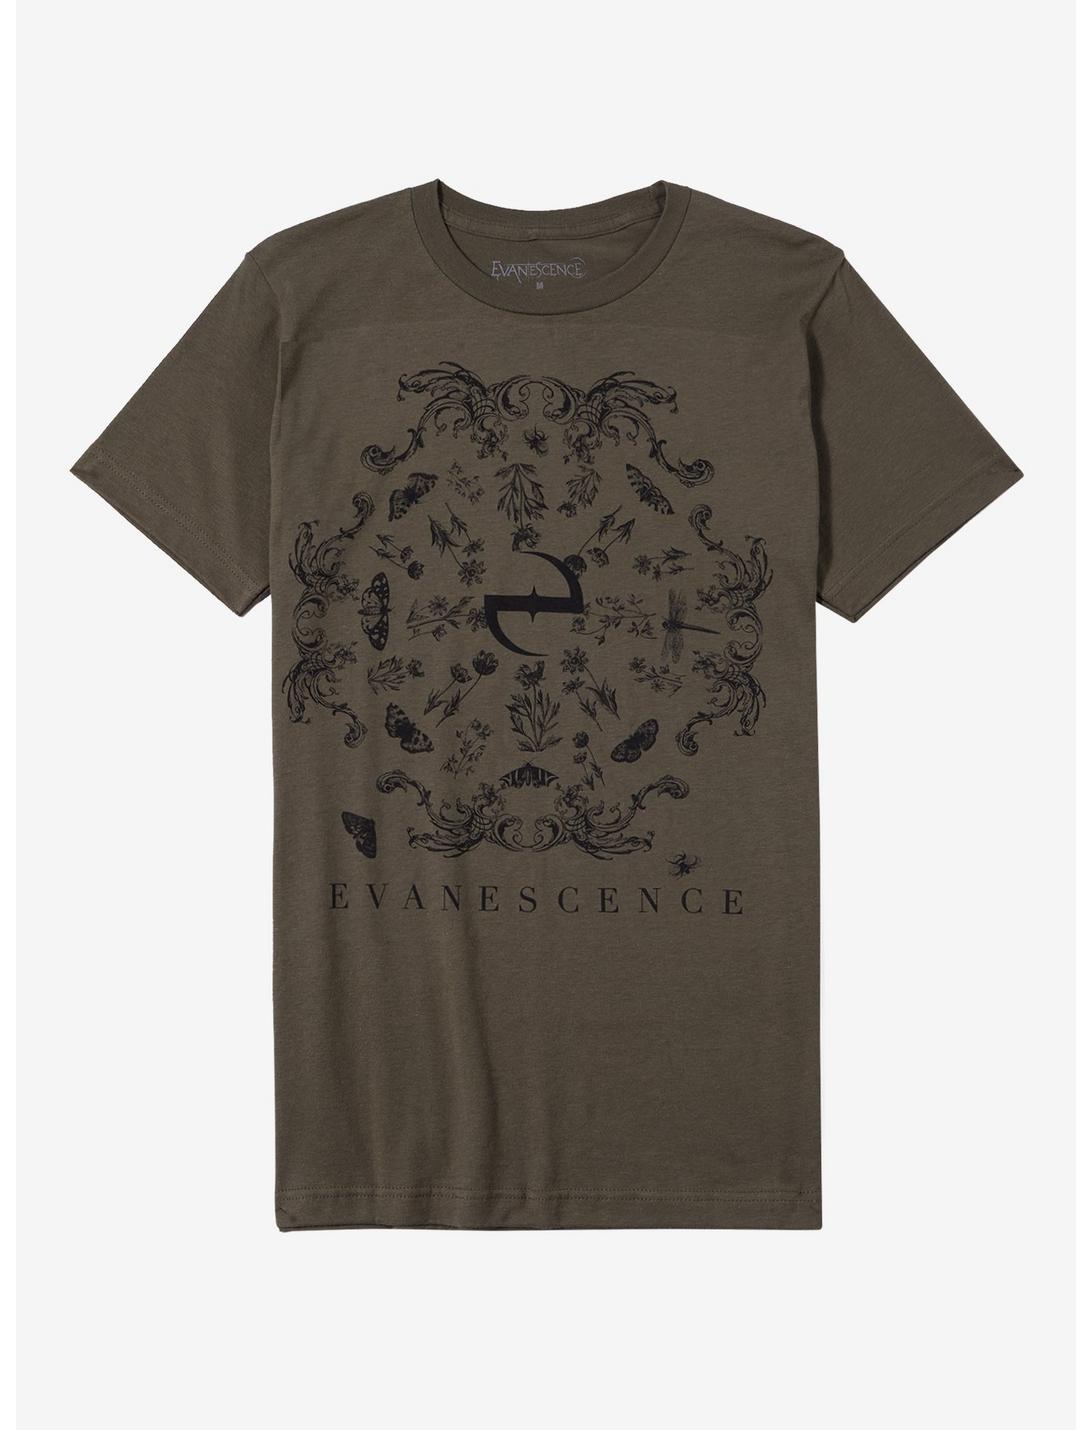 Evanescence Moths & Flowers Boyfriend Fit Girls T-Shirt, MILITARY GREEN, hi-res